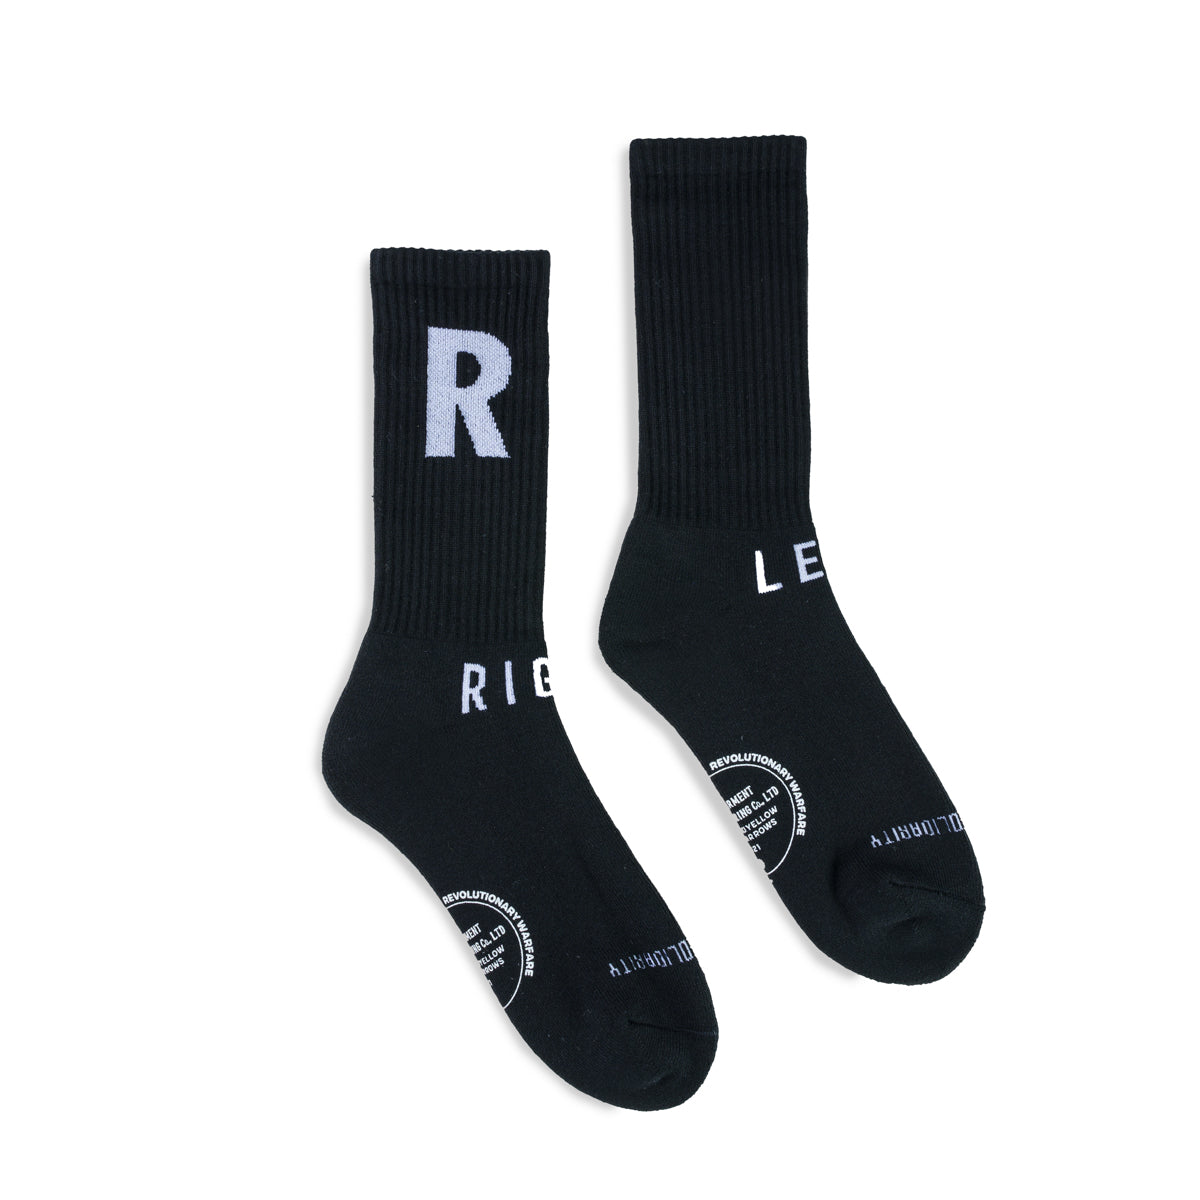 Socks "RL" - Black